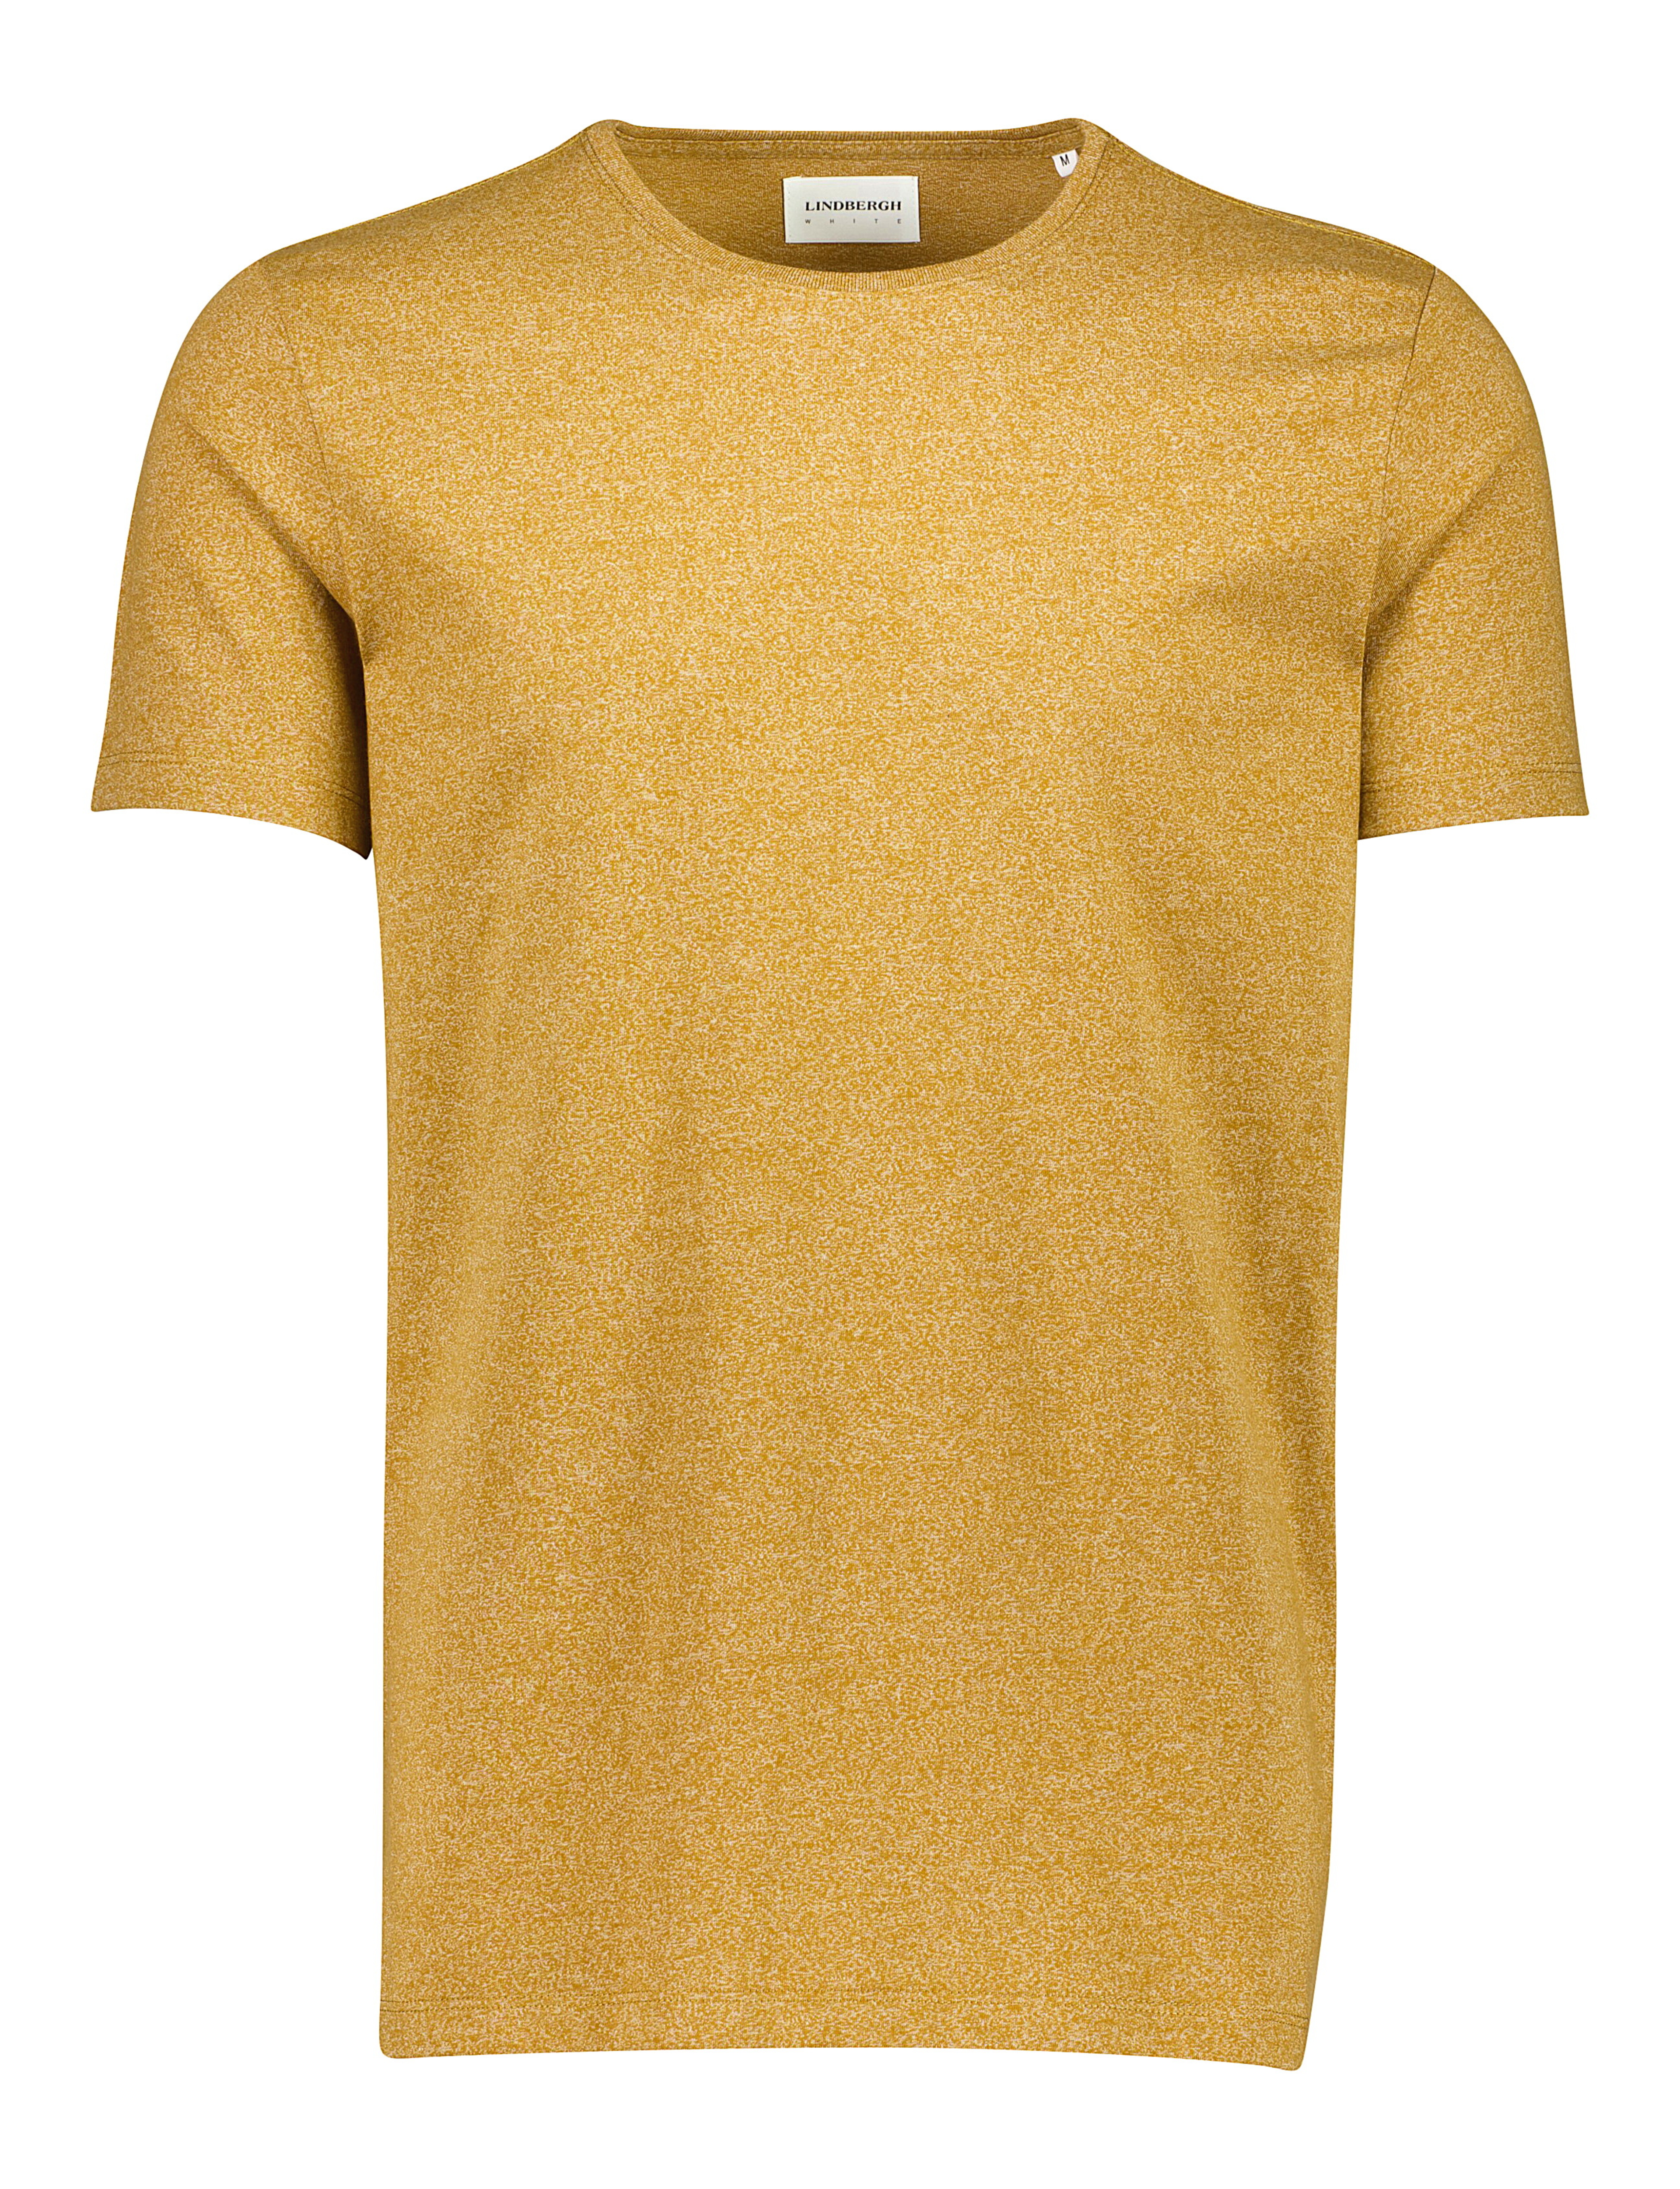 Lindbergh T-Shirt braun / camel mix